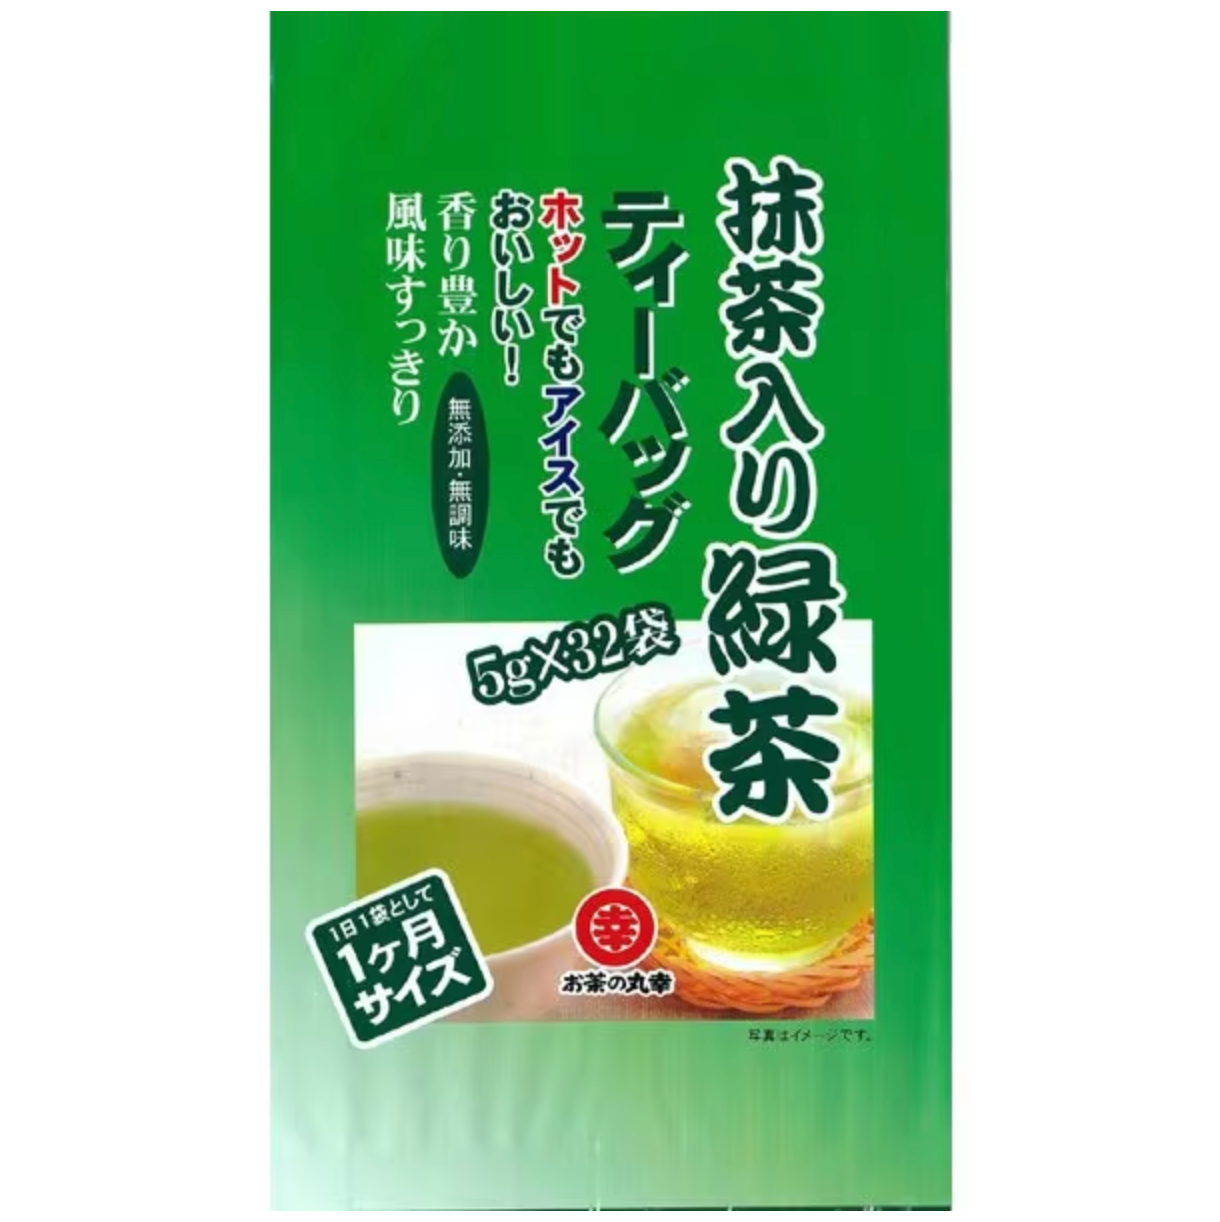 Ochanomaruko Matcha Green Tea Tea Bags 160g (5g x 32 pieces)